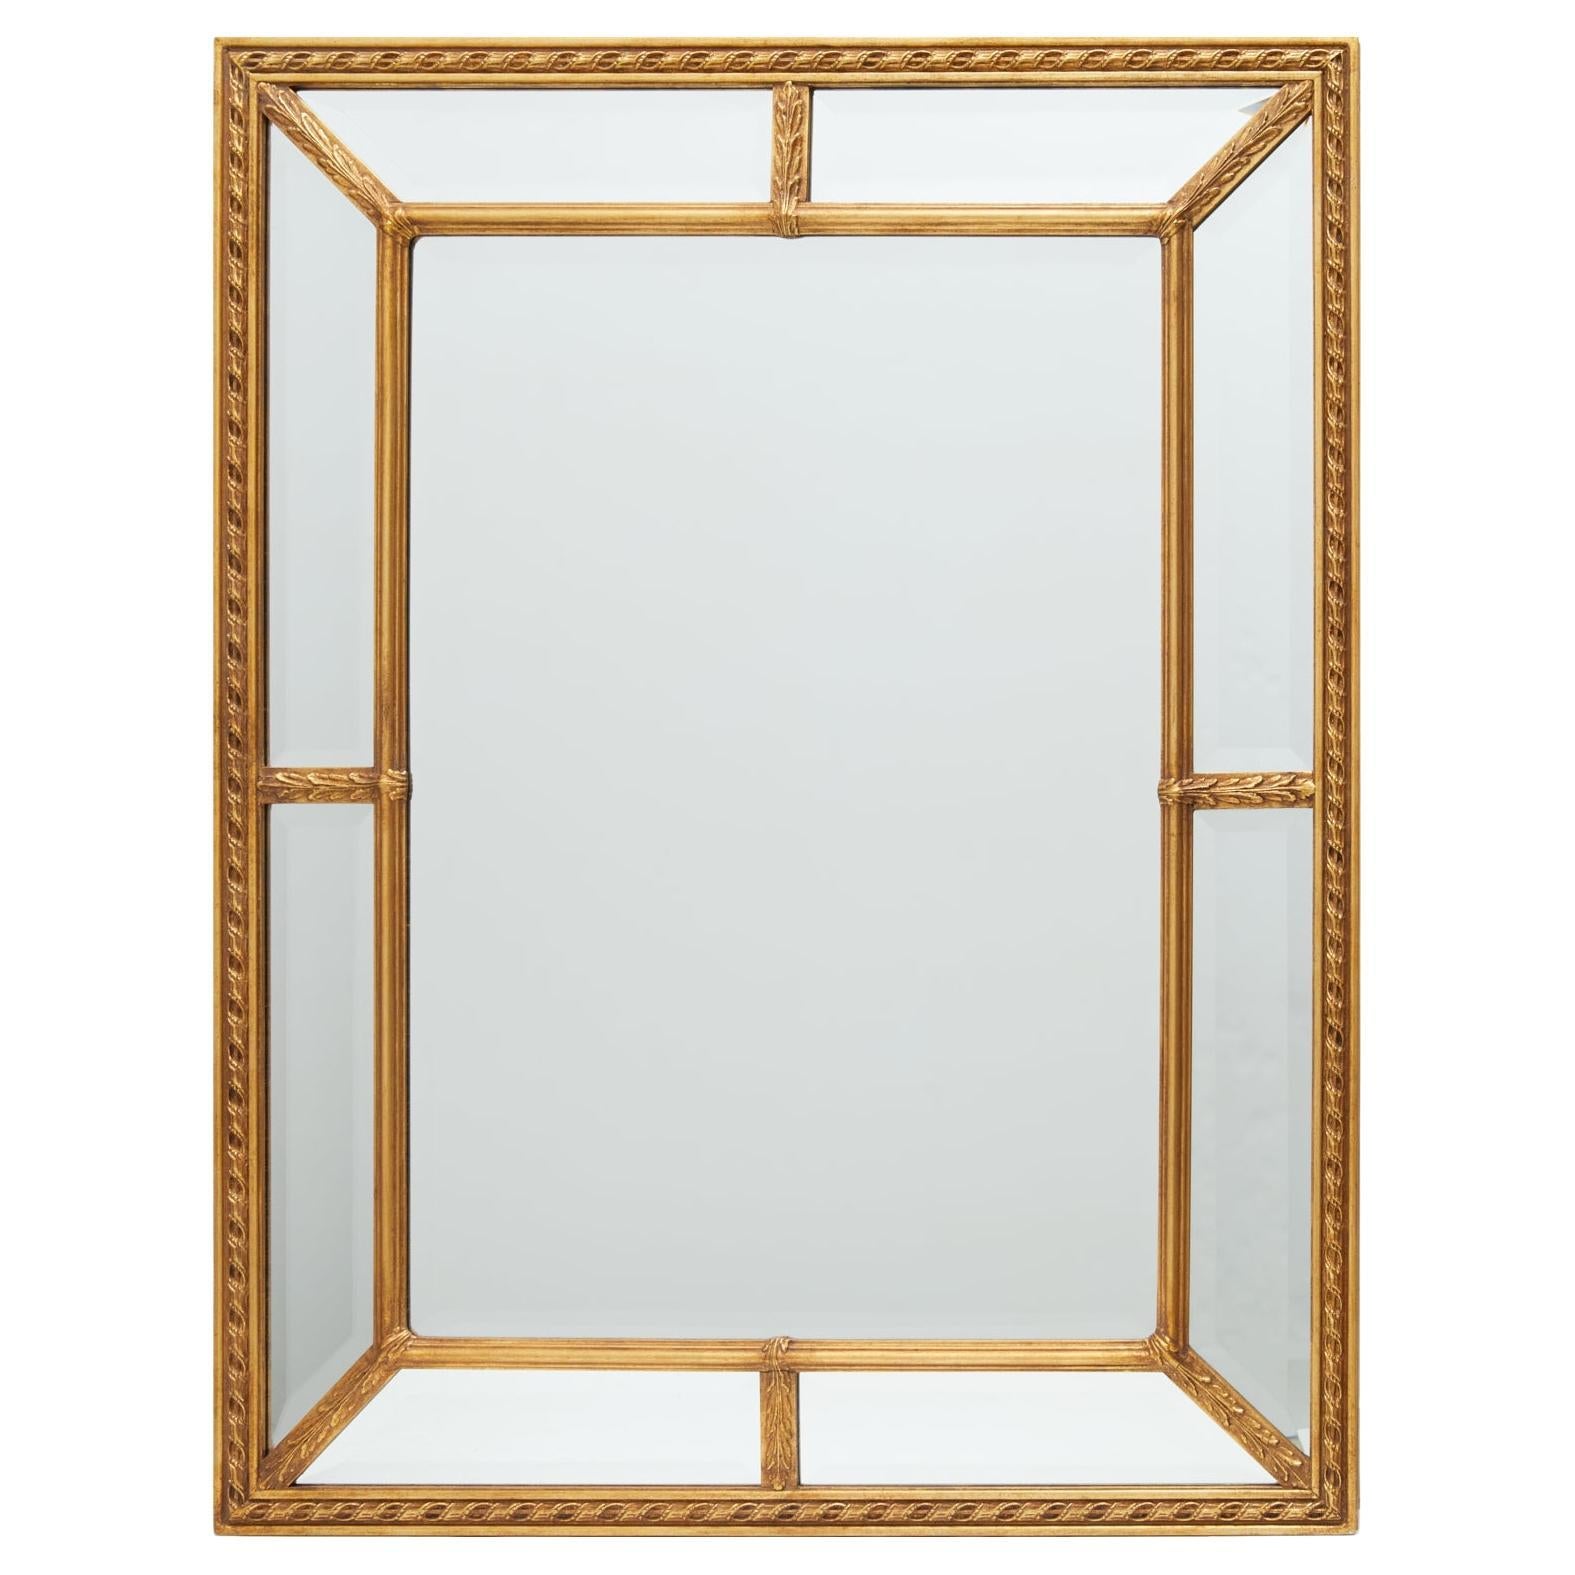 20th C. Carvers' Guild Regency Double Rectangle Mirror #1204 Blattgold antikisiert